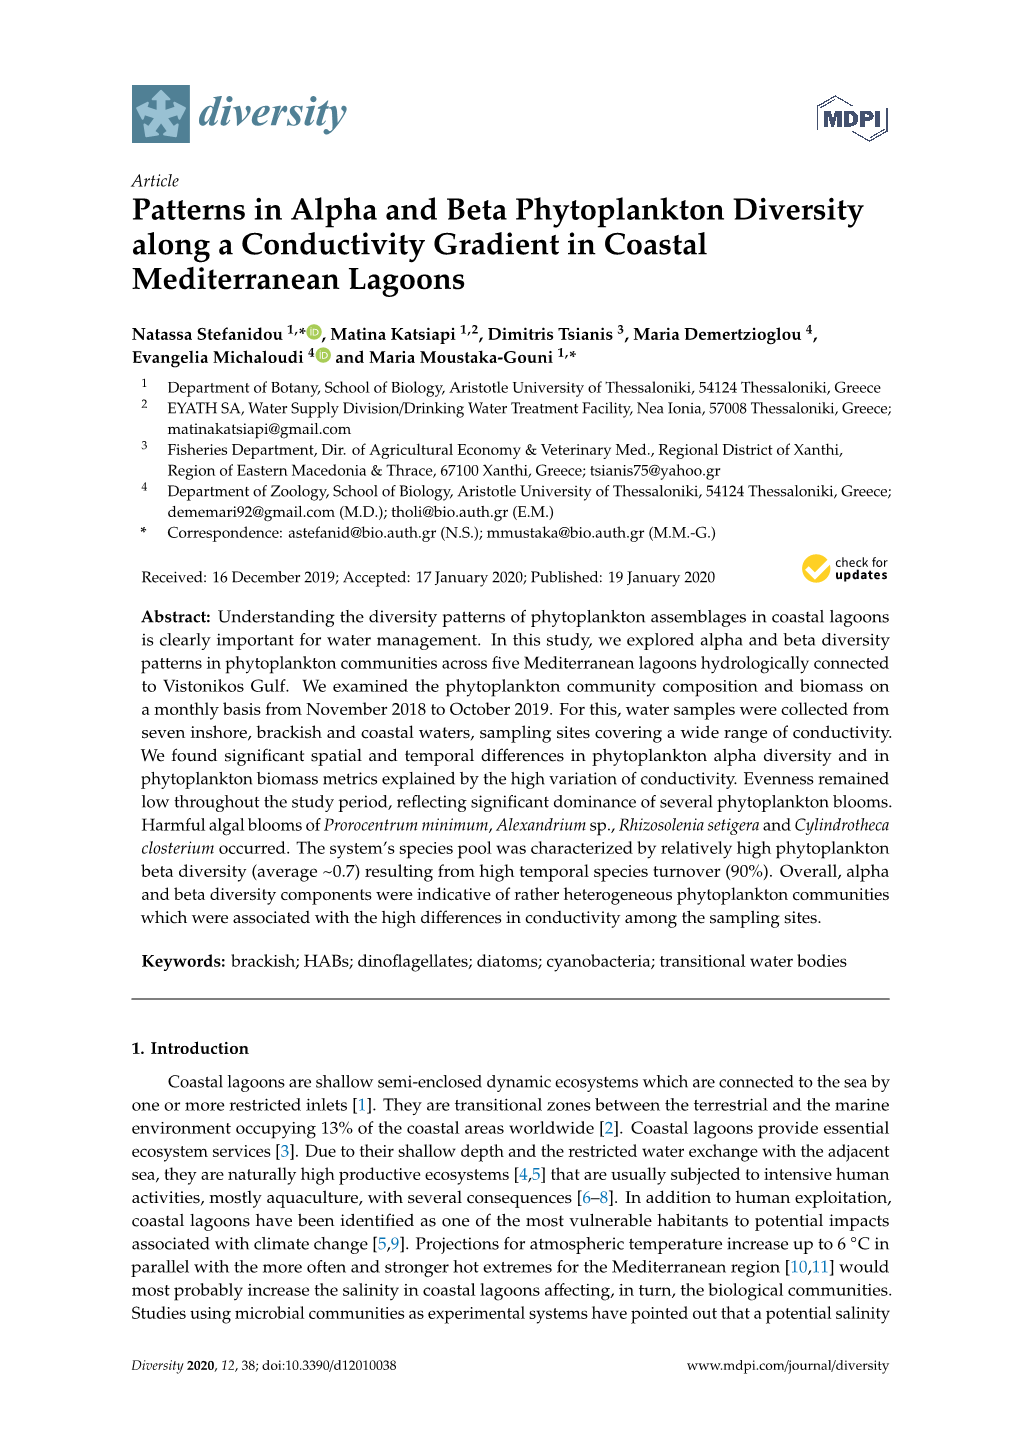 Patterns in Alpha and Beta Phytoplankton Diversity Along a Conductivity Gradient in Coastal Mediterranean Lagoons